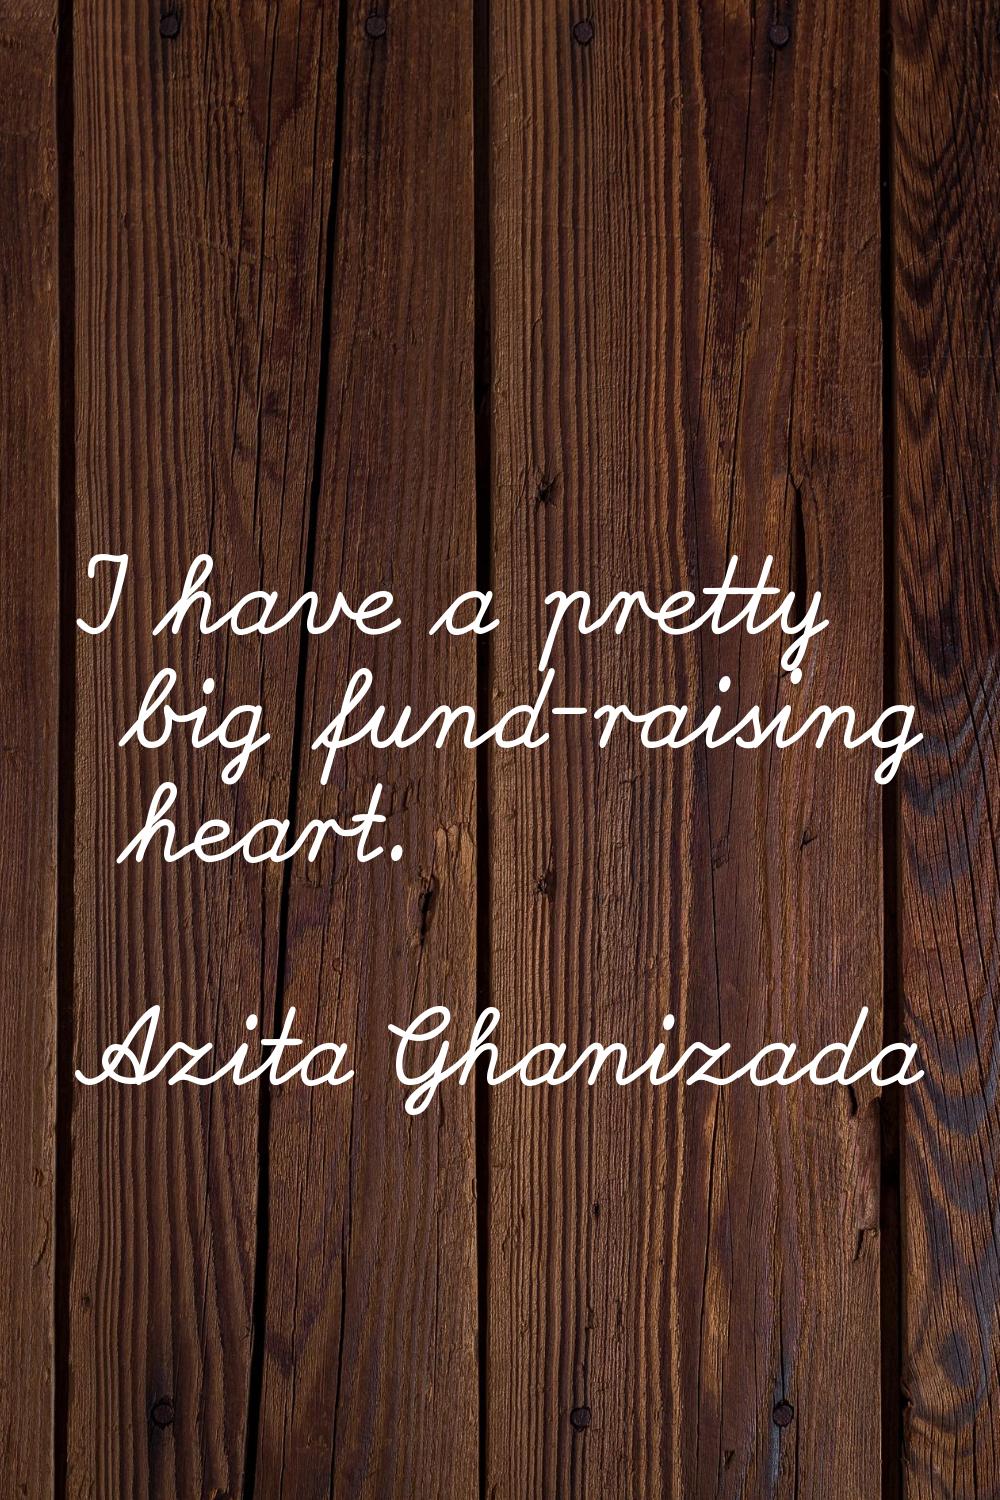 I have a pretty big fund-raising heart.